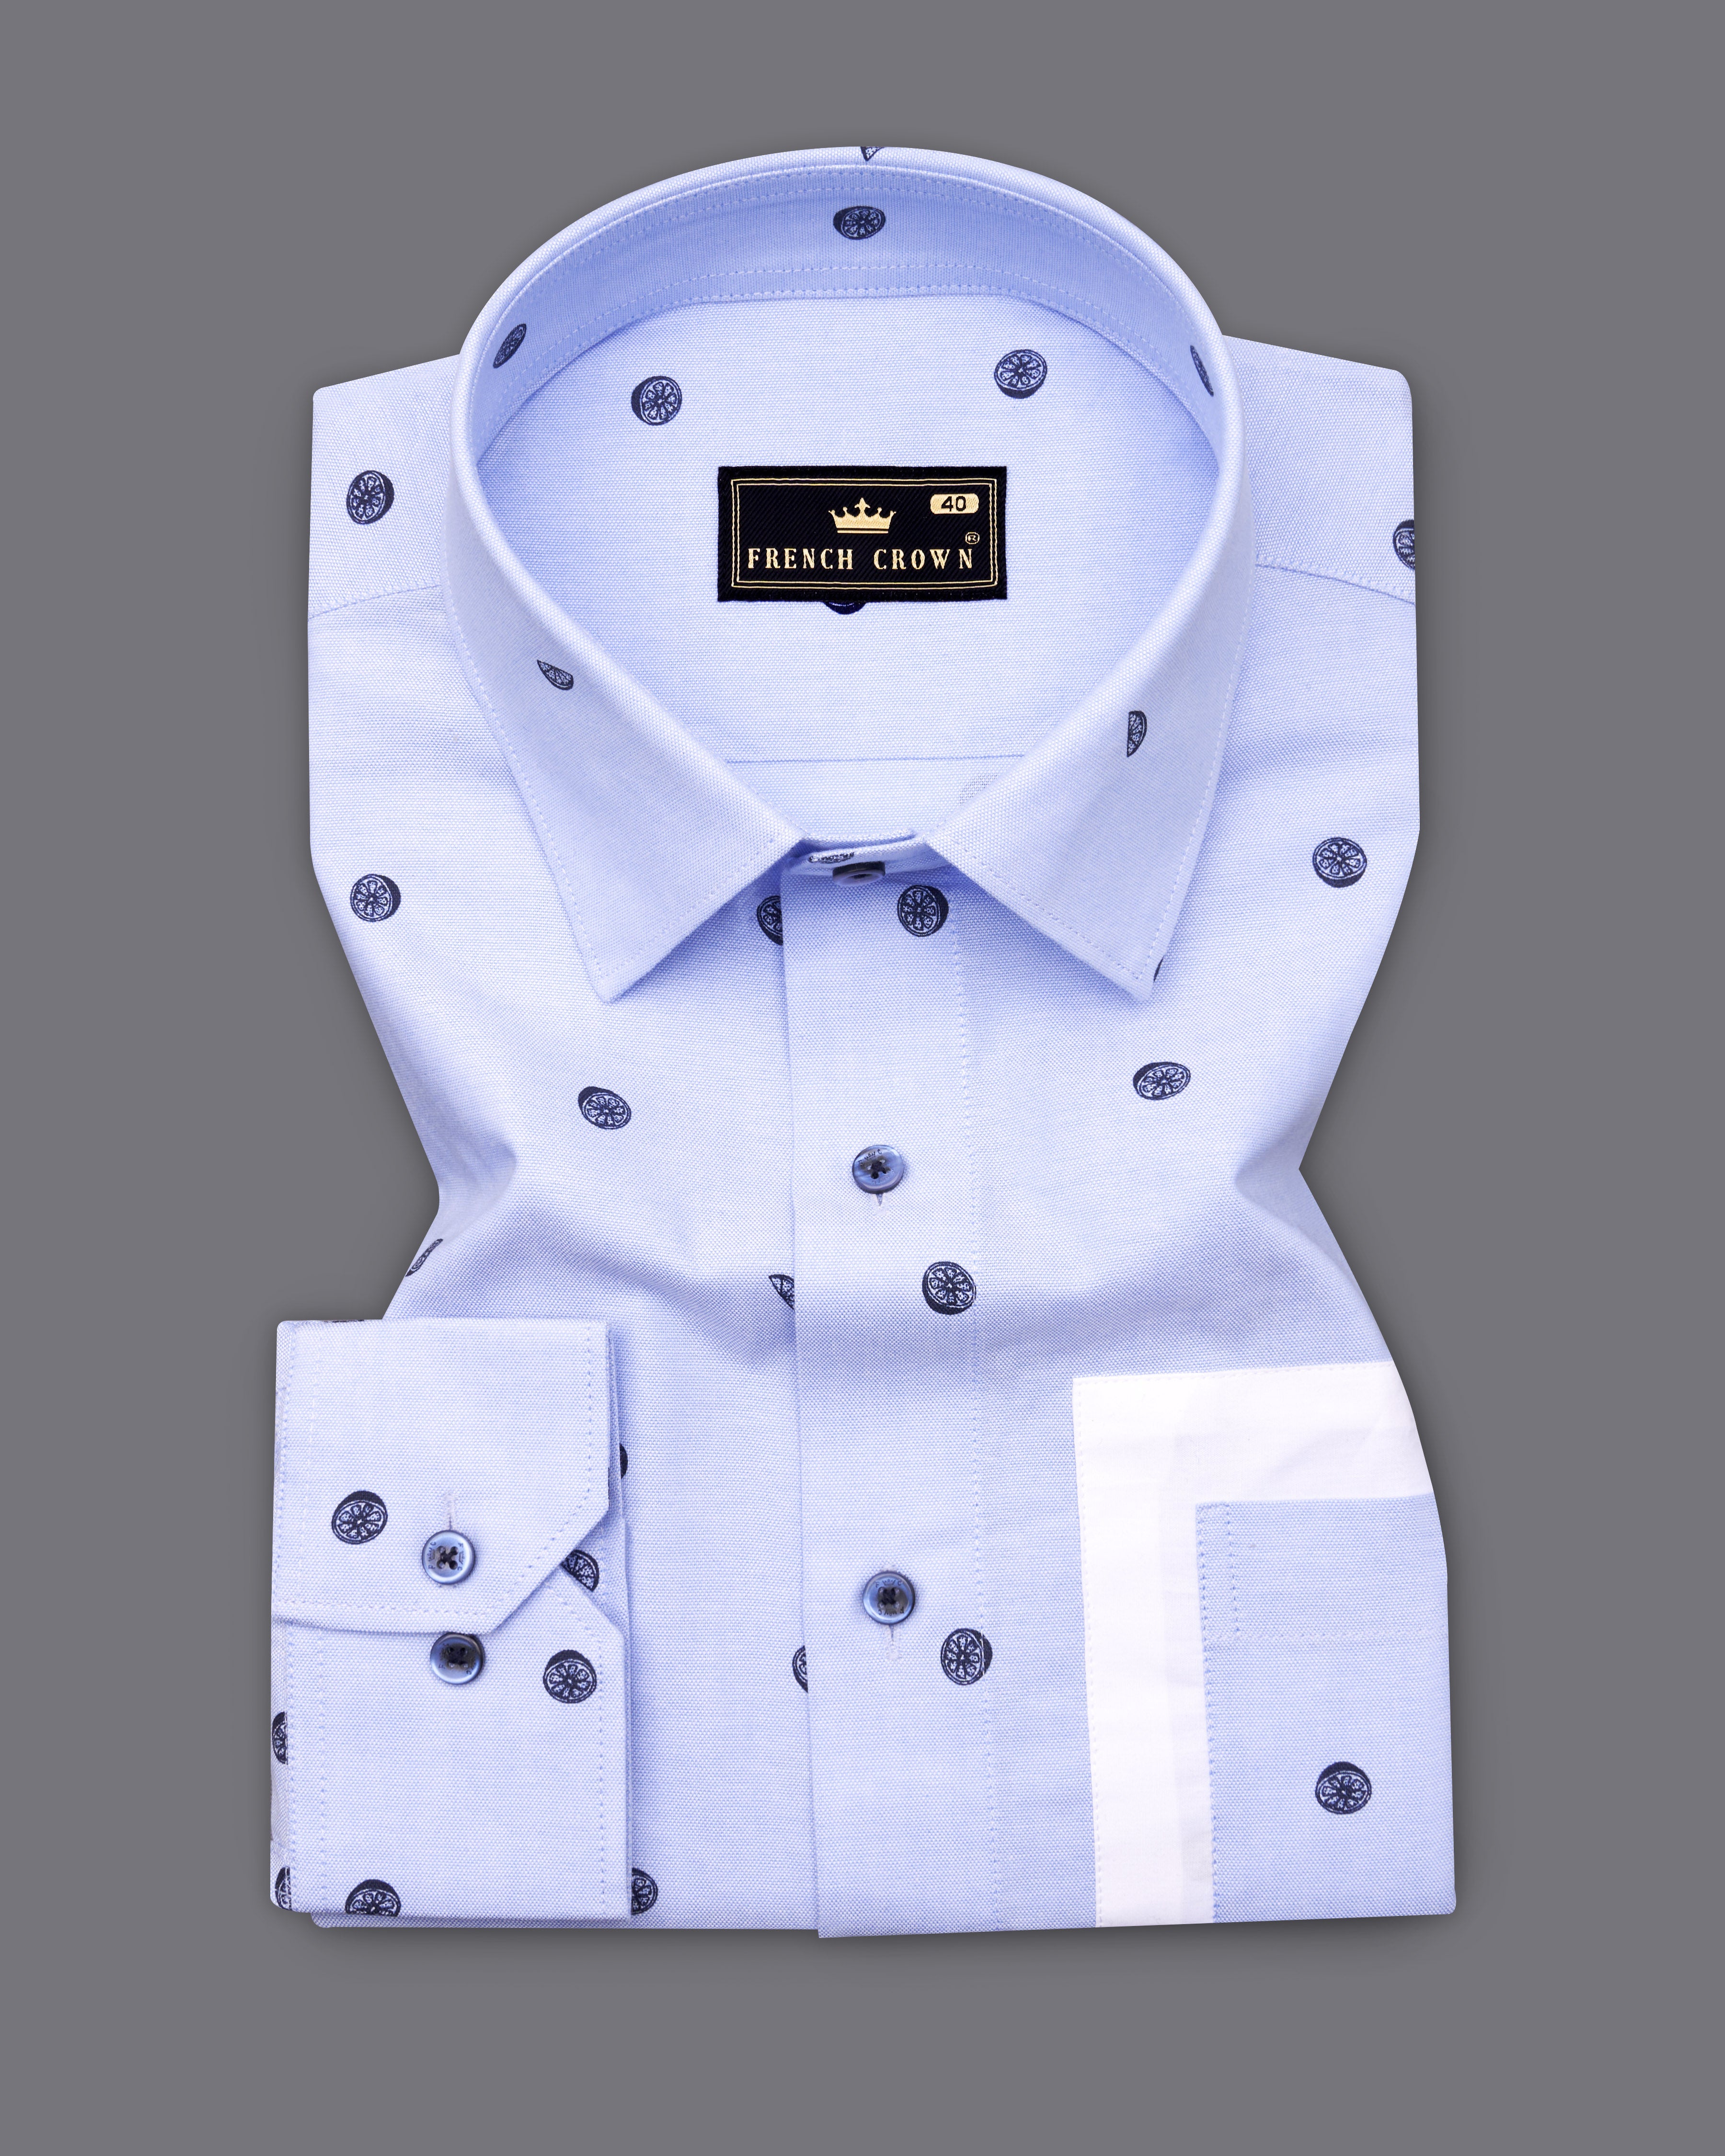 Periwinkle Blue Textured With Patch Pocket Royal Oxford Designer Shirt 9779-BLE-P382-38, 9779-BLE-P382-H-38, 9779-BLE-P382-39, 9779-BLE-P382-H-39, 9779-BLE-P382-40, 9779-BLE-P382-H-40, 9779-BLE-P382-42, 9779-BLE-P382-H-42, 9779-BLE-P382-44, 9779-BLE-P382-H-44, 9779-BLE-P382-46, 9779-BLE-P382-H-46, 9779-BLE-P382-48, 9779-BLE-P382-H-48, 9779-BLE-P382-50, 9779-BLE-P382-H-50, 9779-BLE-P382-52, 9779-BLE-P382-H-52